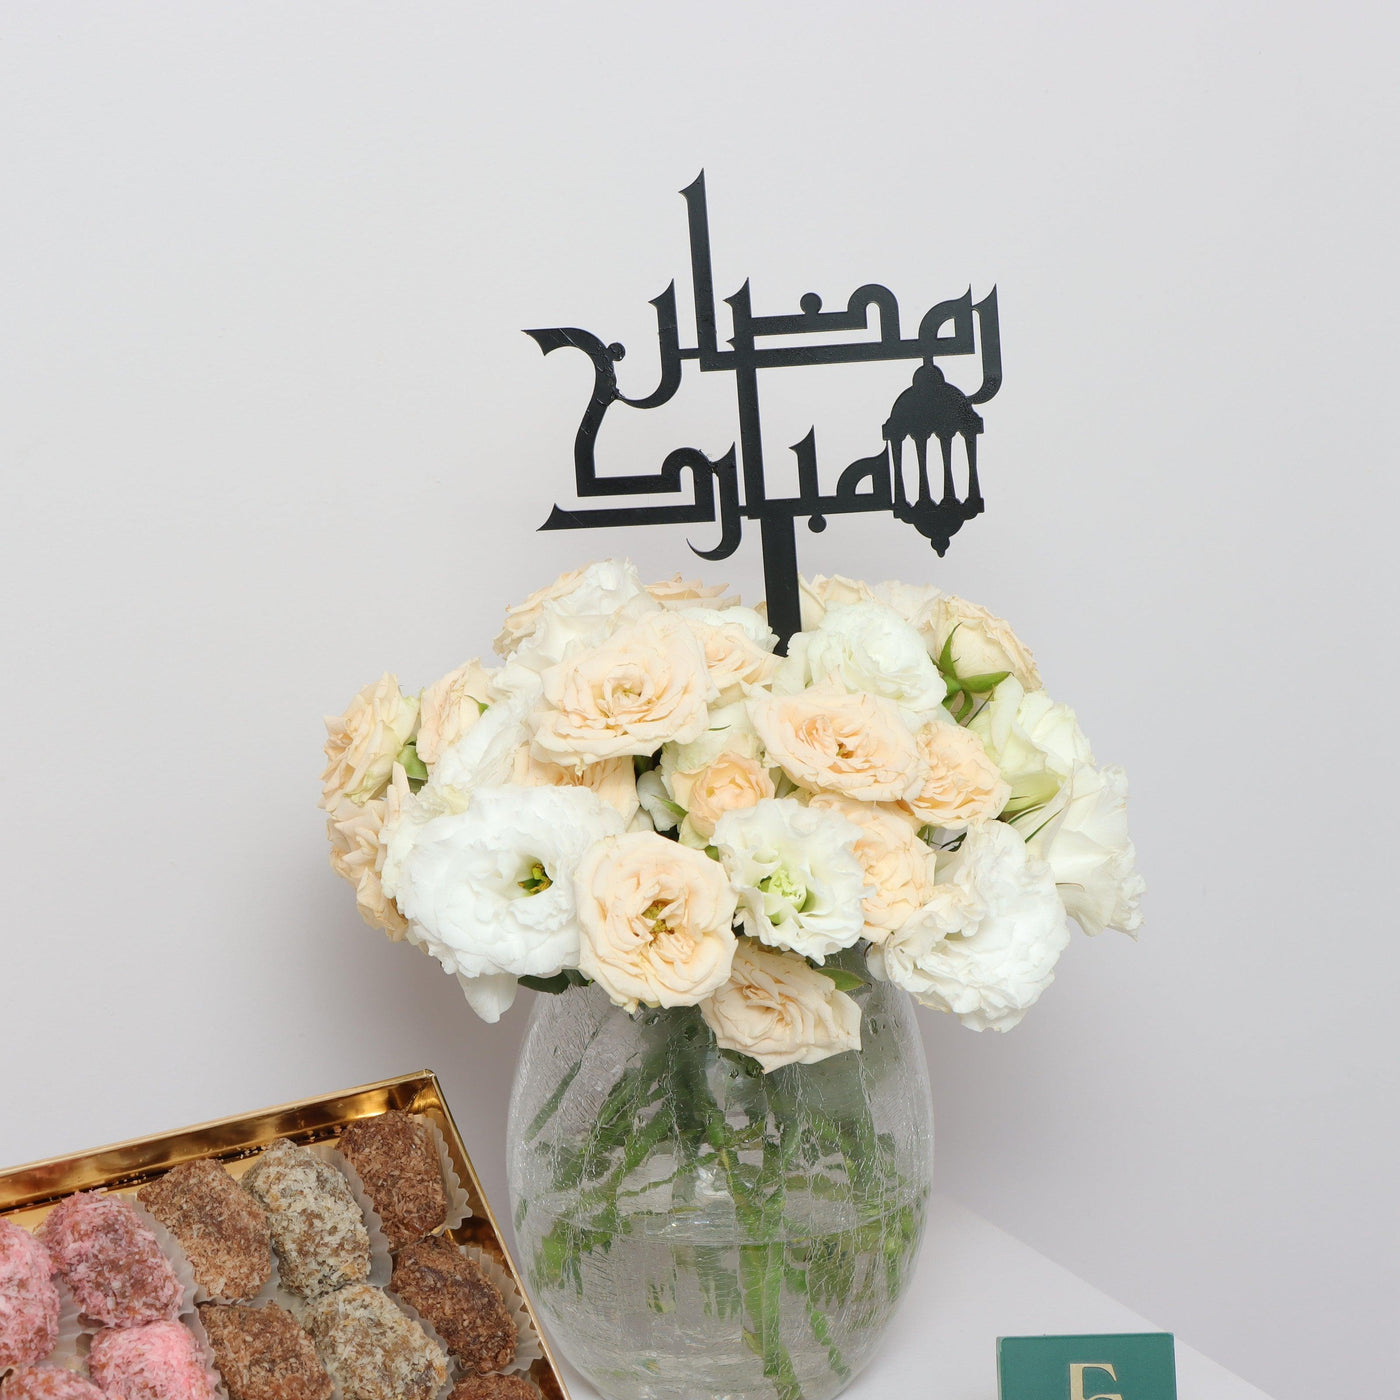 Lite Flower Vase and Sokari Stuffed Dates 0.5 Kg Ramadan gift